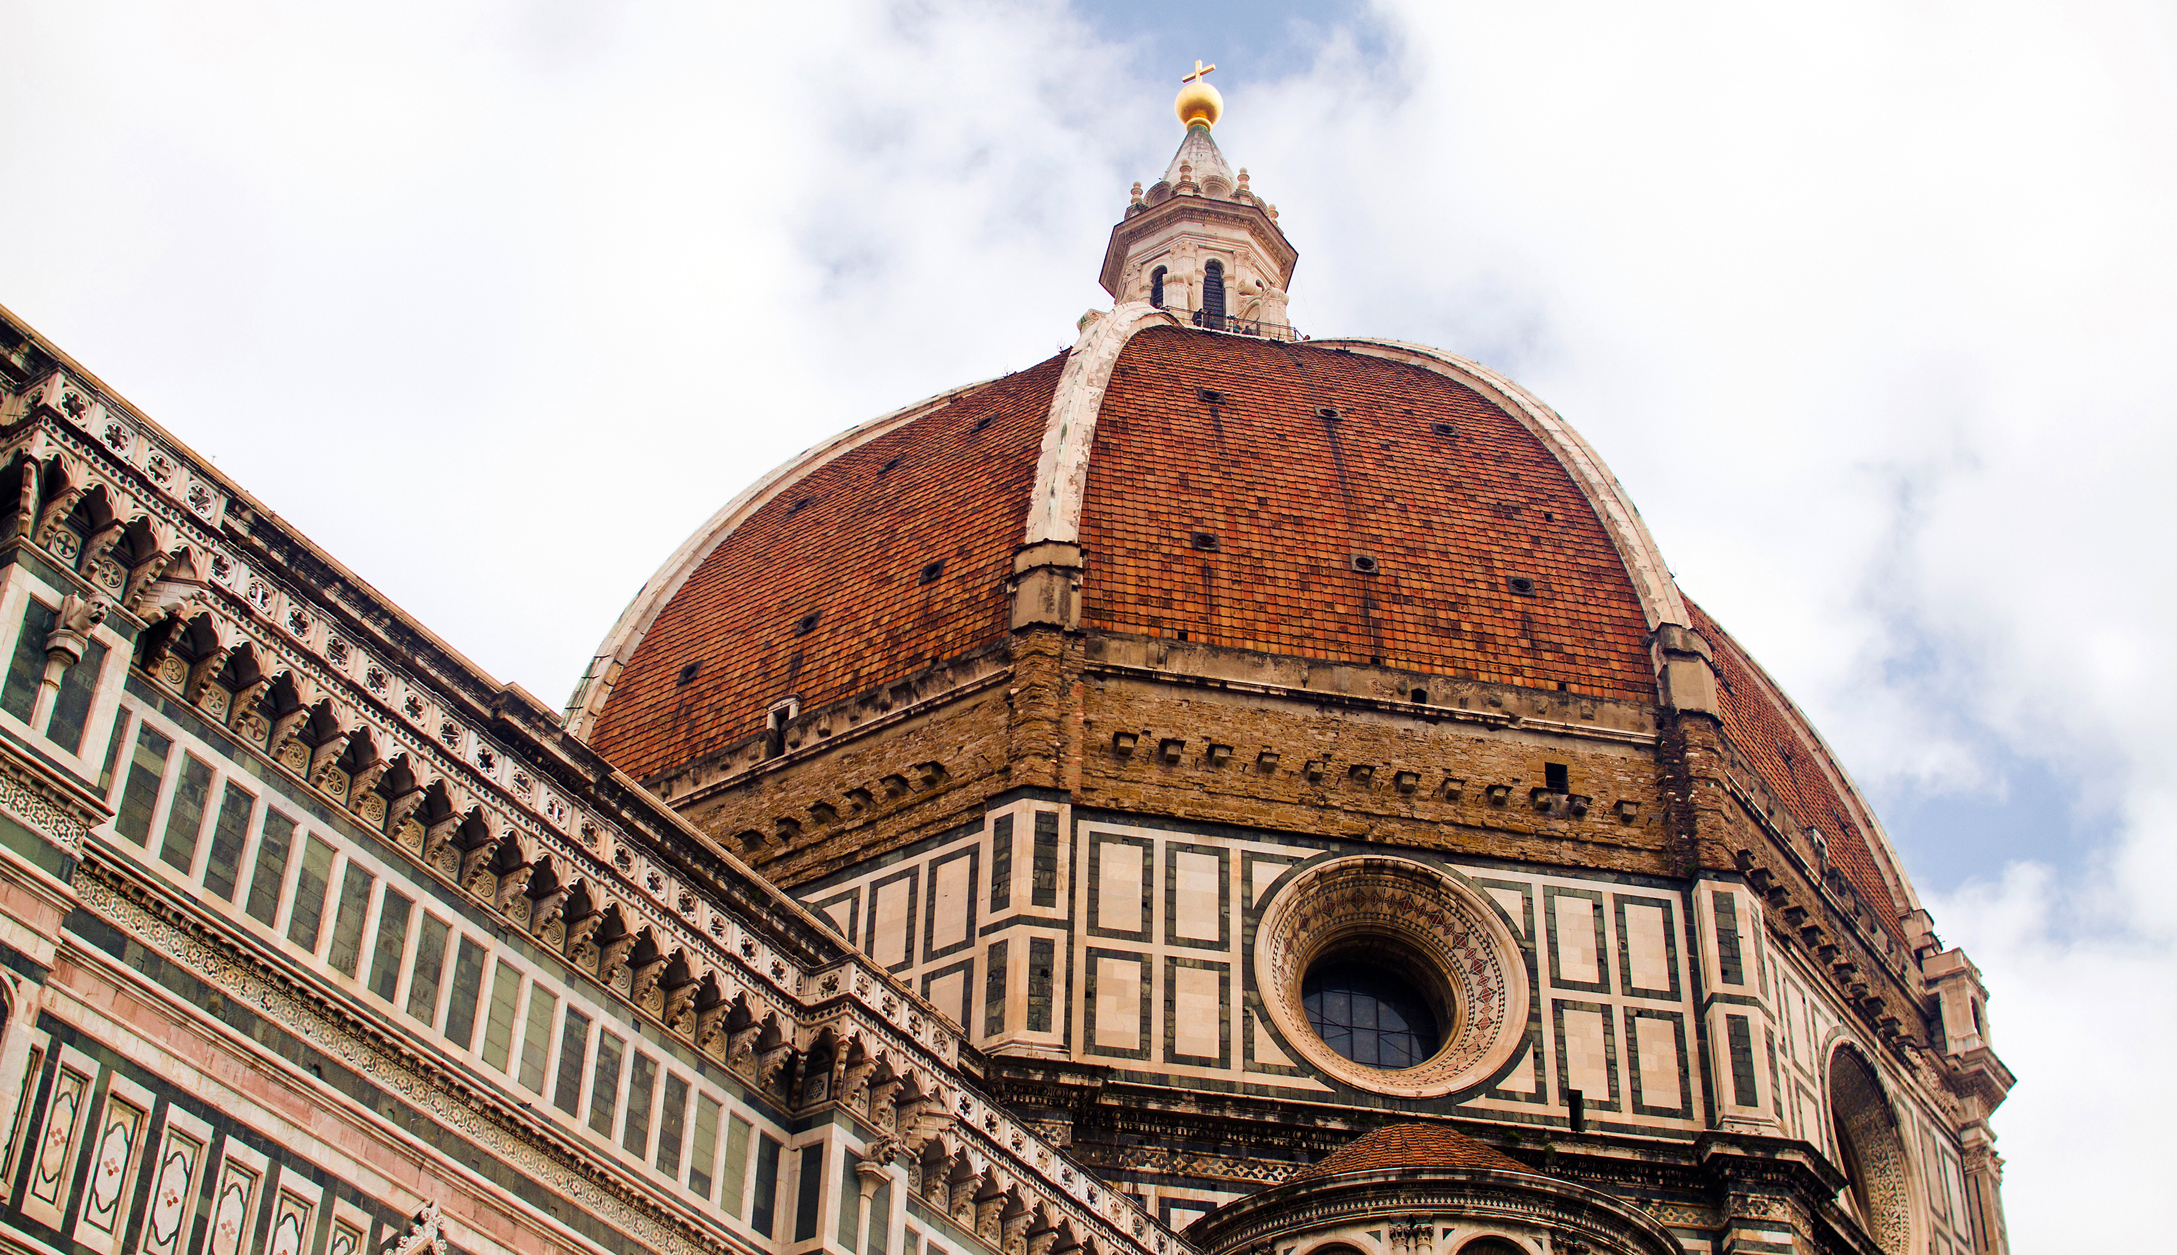 Florence Tours with David, Duomo & Uffizi | Walks of Italy